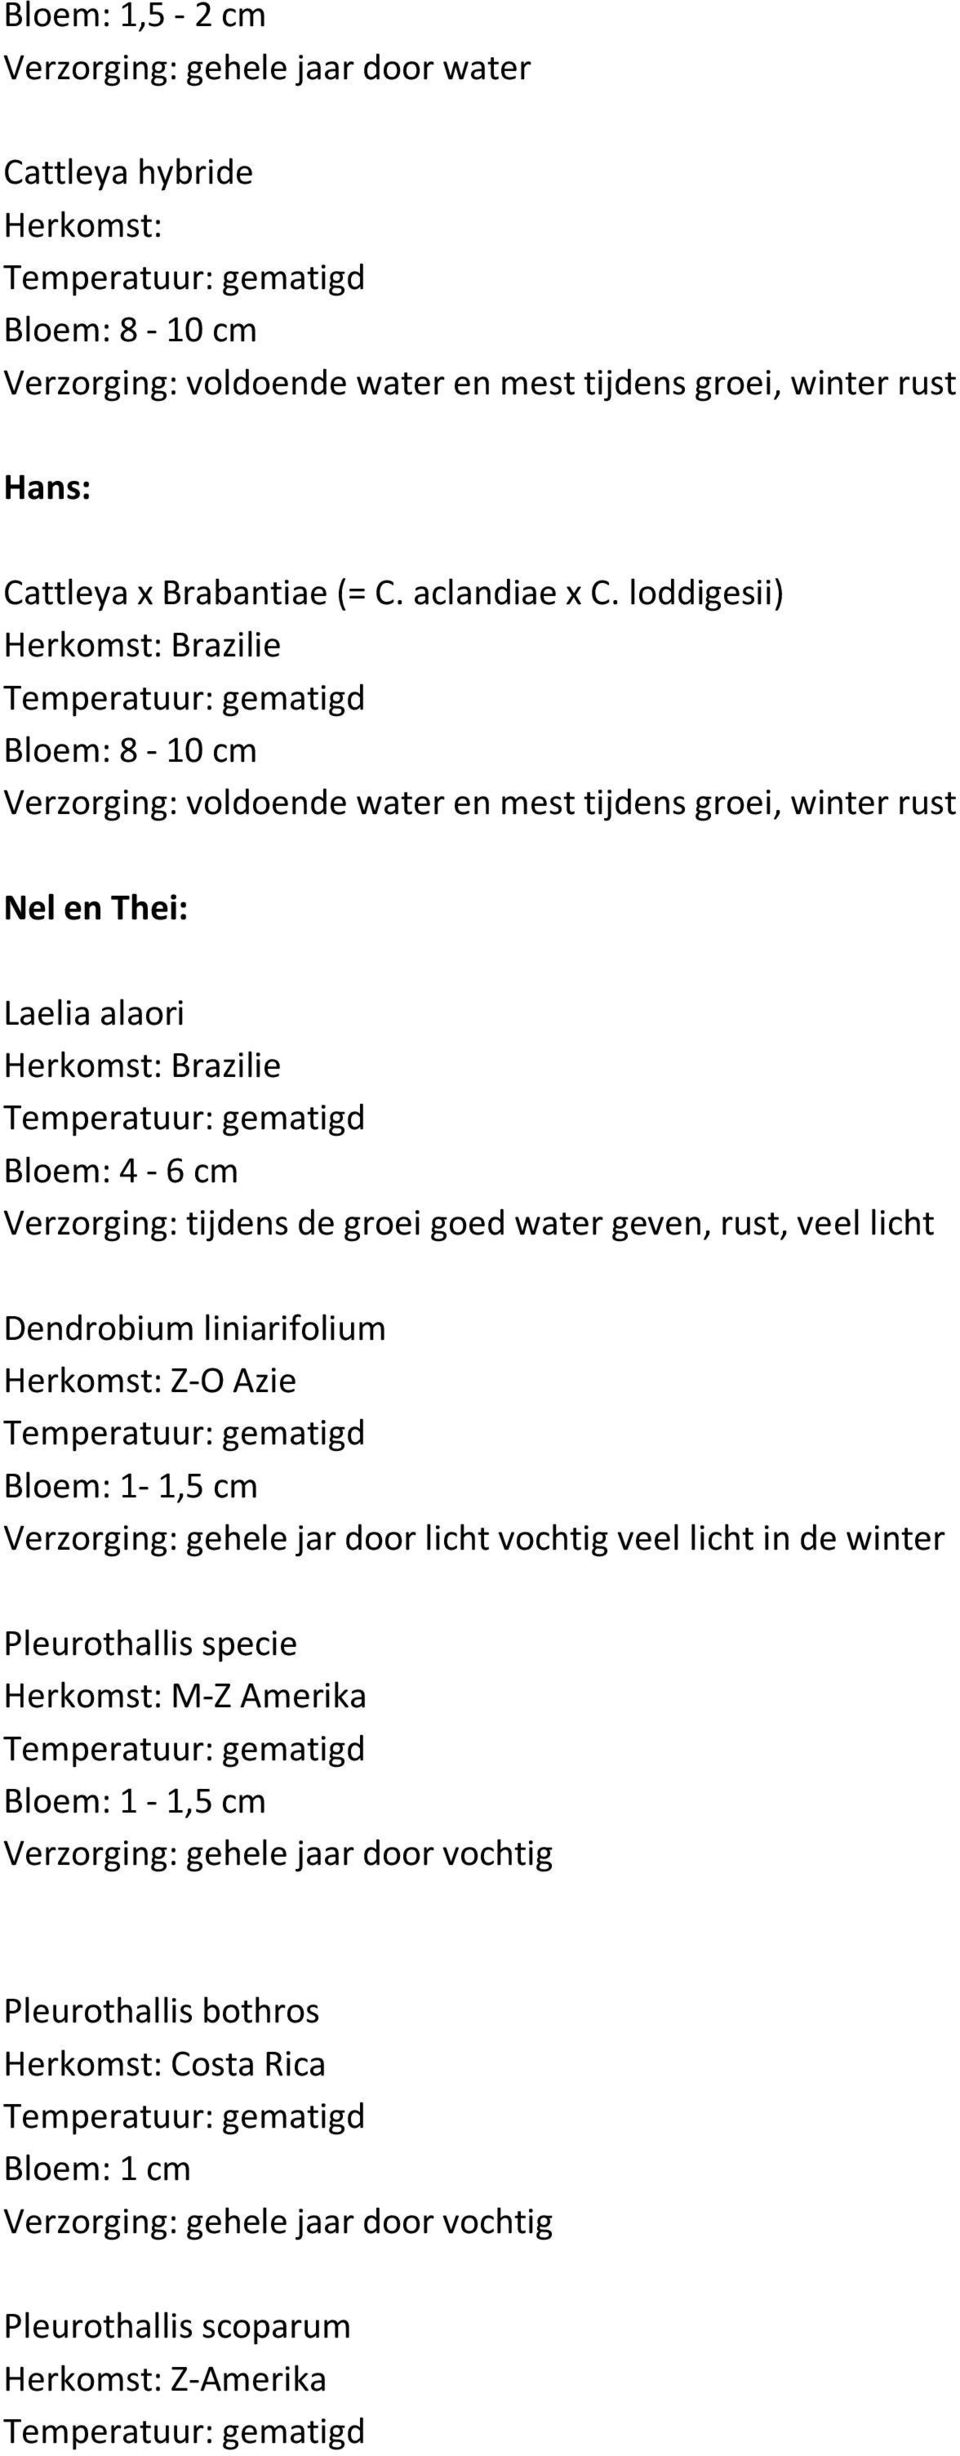 loddigesii) Verzorging: voldoende water en mest tijdens groei, winter rust Nel en Thei: Laelia alaori Bloem: 4-6 cm Verzorging: tijdens de groei goed